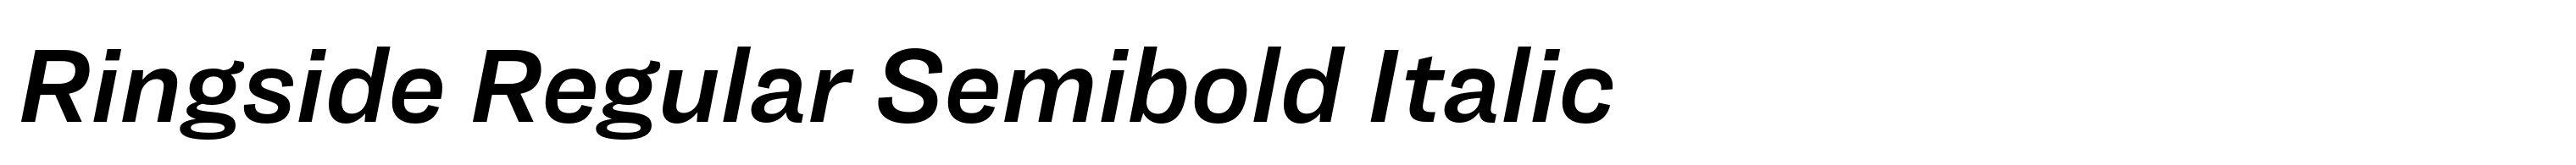 Ringside Regular Semibold Italic